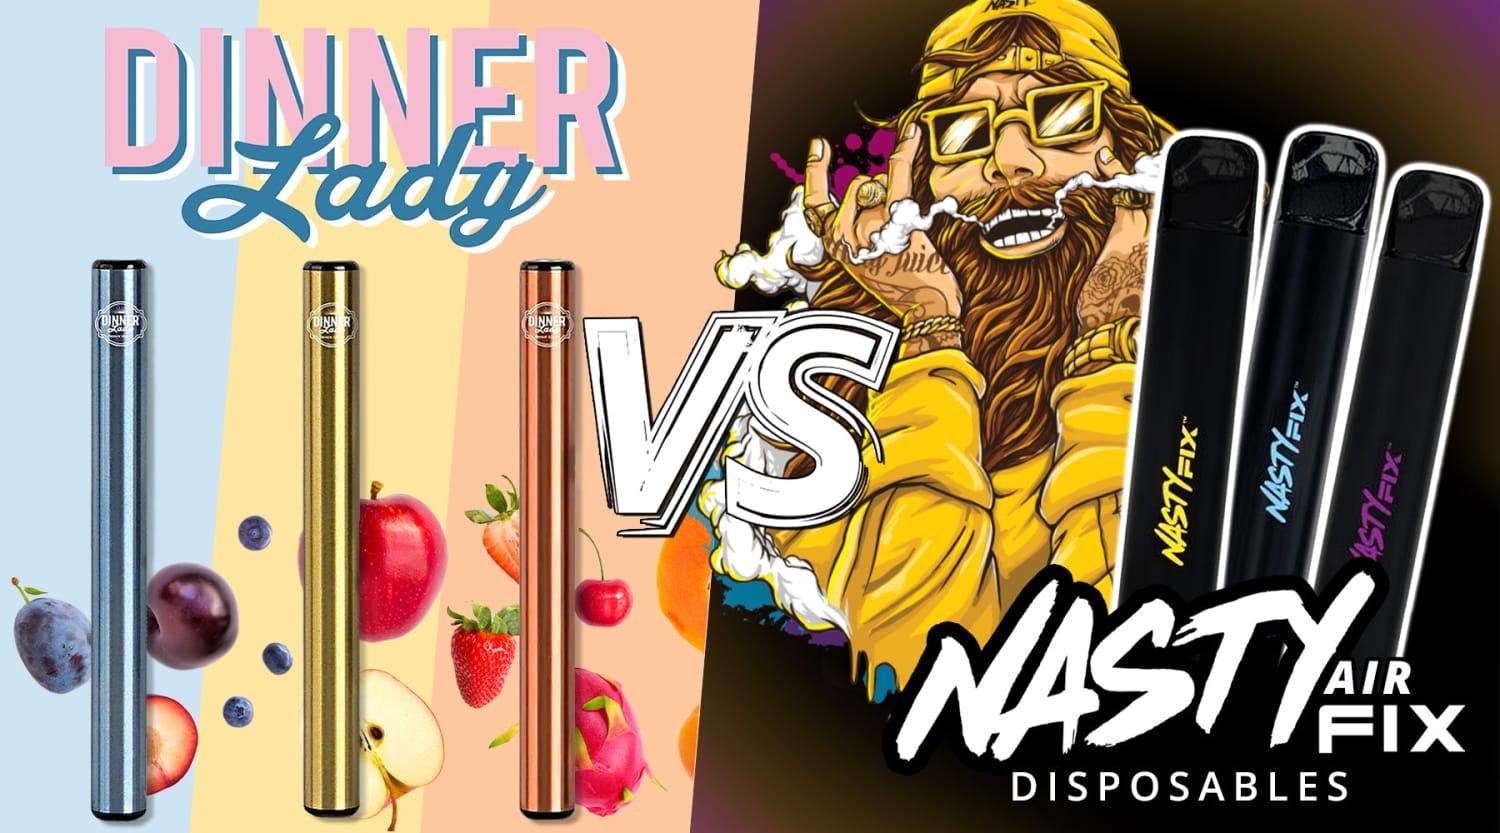 Dinner Lady Vs Nasty Fix Airfix Disposables - Brand:Dinner Lady, Brand:Nasty Juice, Category:Vape Kits, Sub Category:Disposables